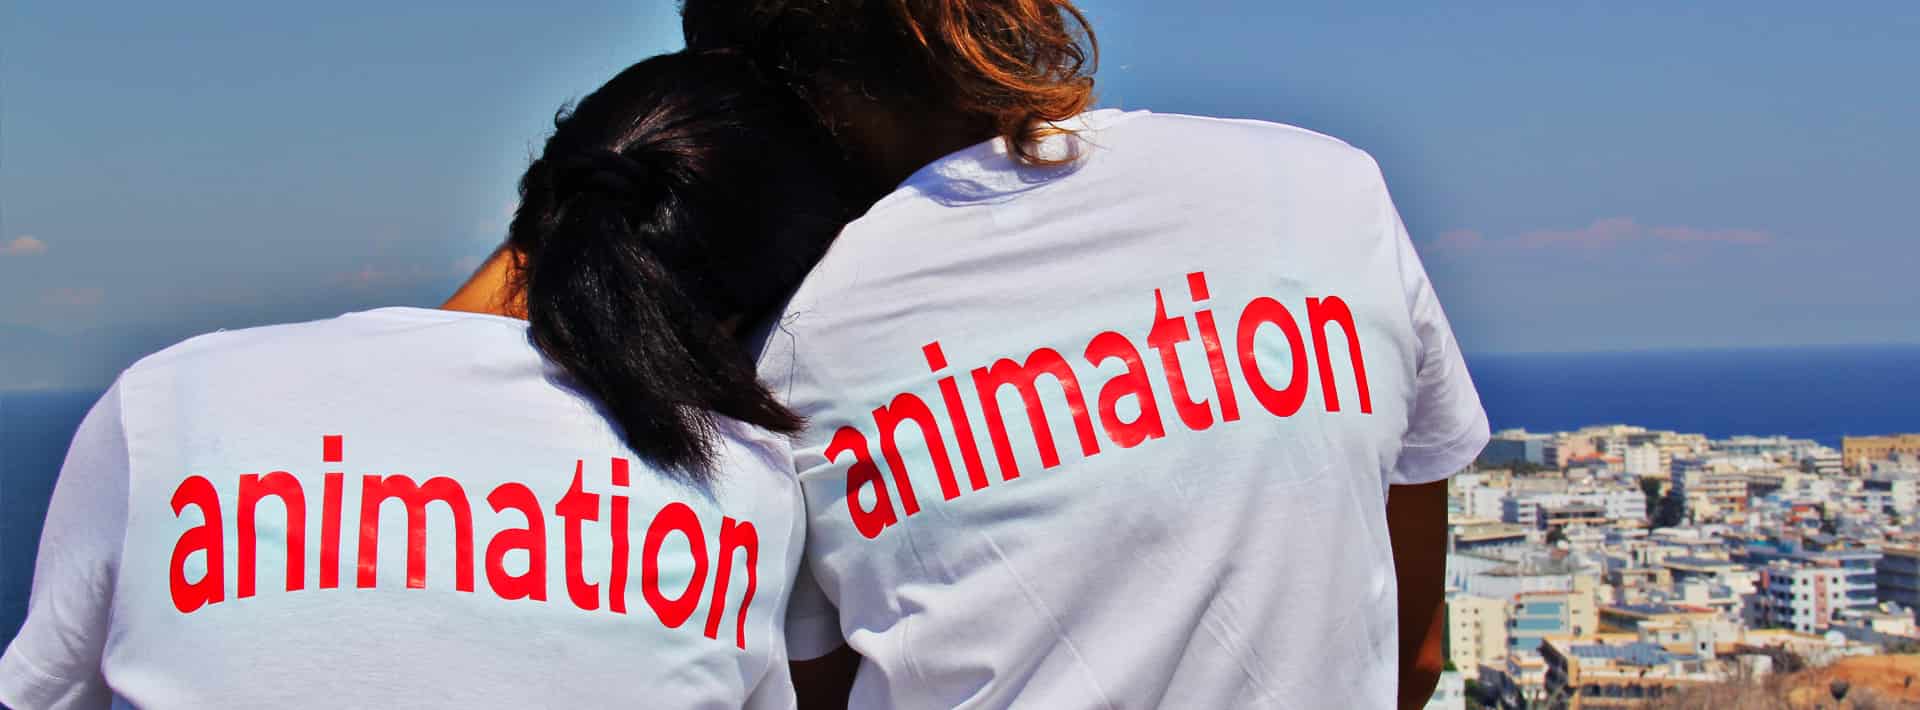 animation team